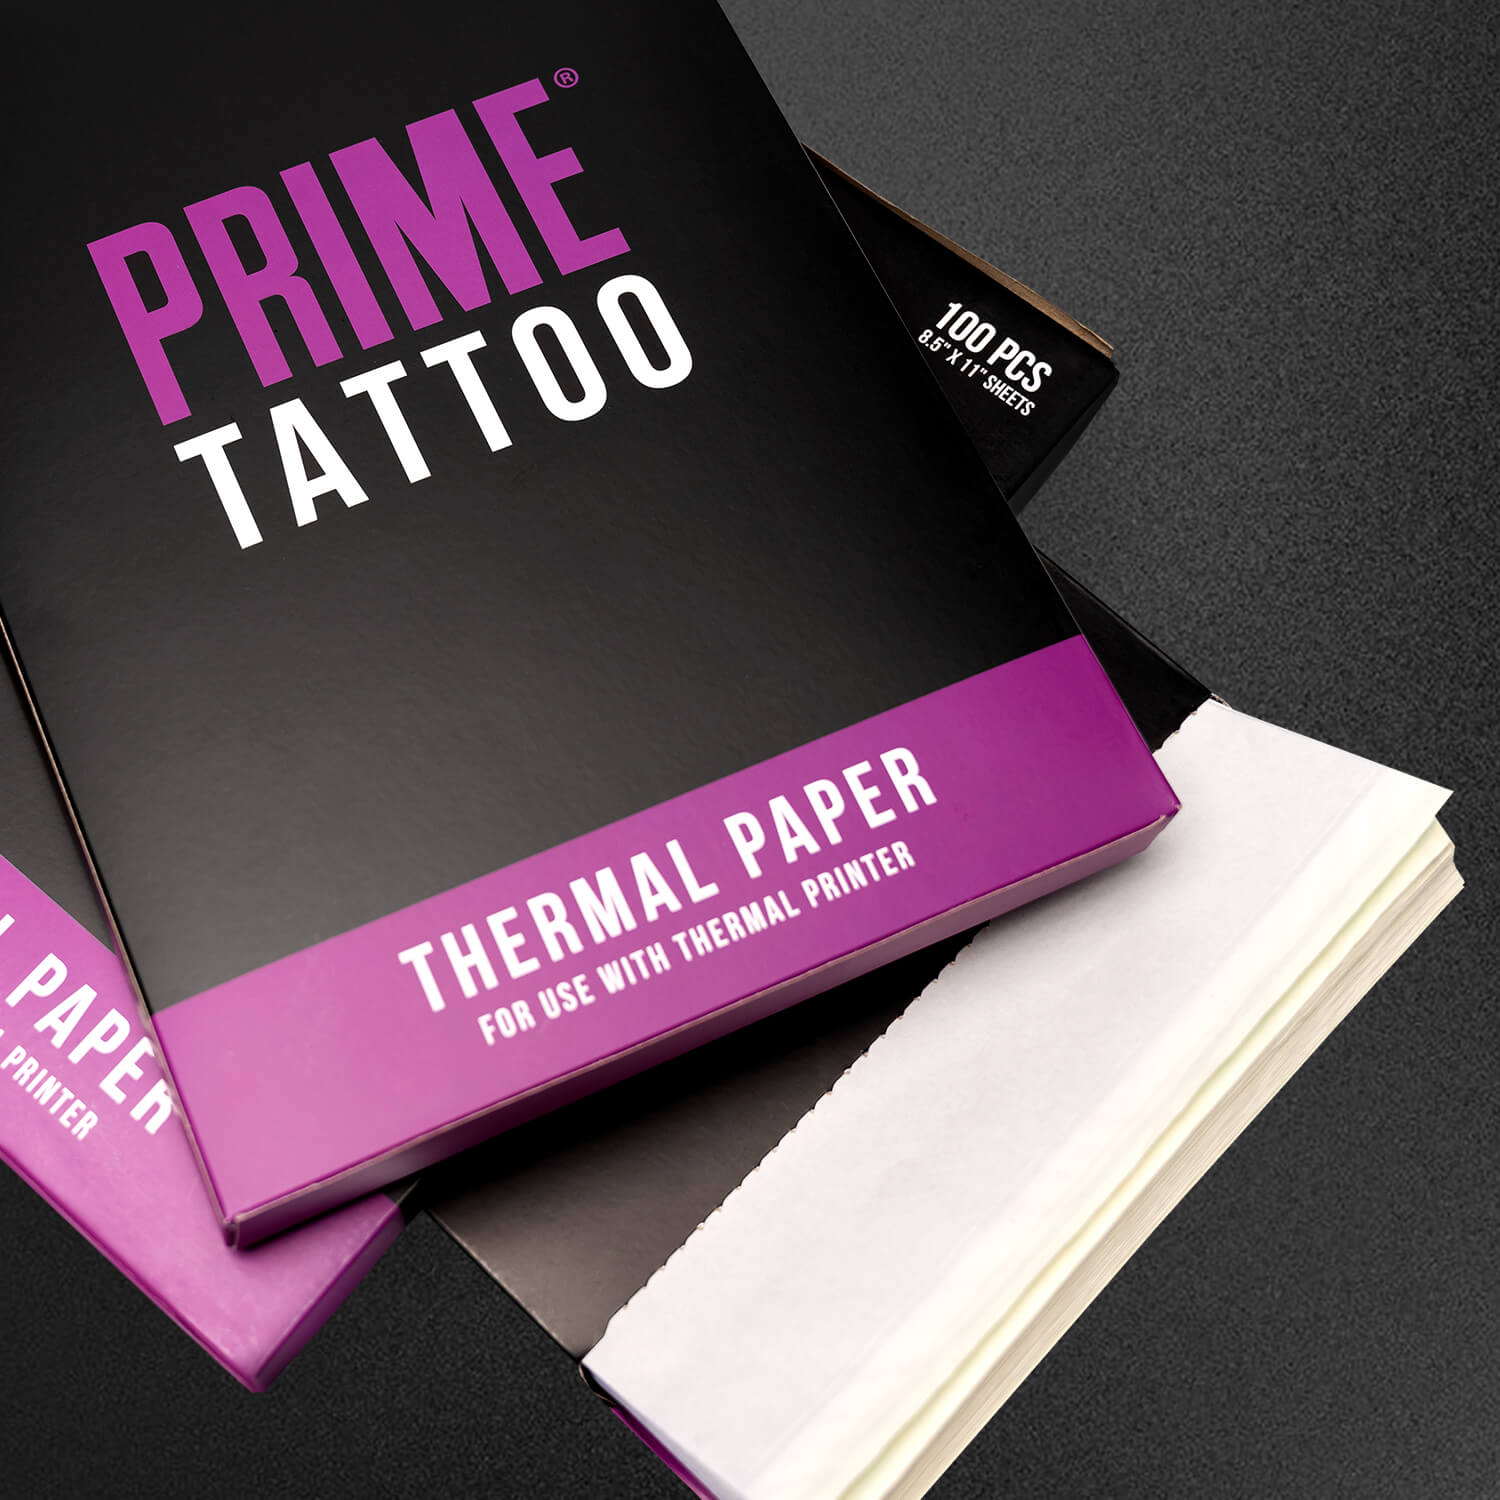 10 Sheets Tattoo Transfer Paper A4 Size Tattoo Stencil Paper Thermal Copy  Paper for Tattoo Transfer Machine Accessories Supplier